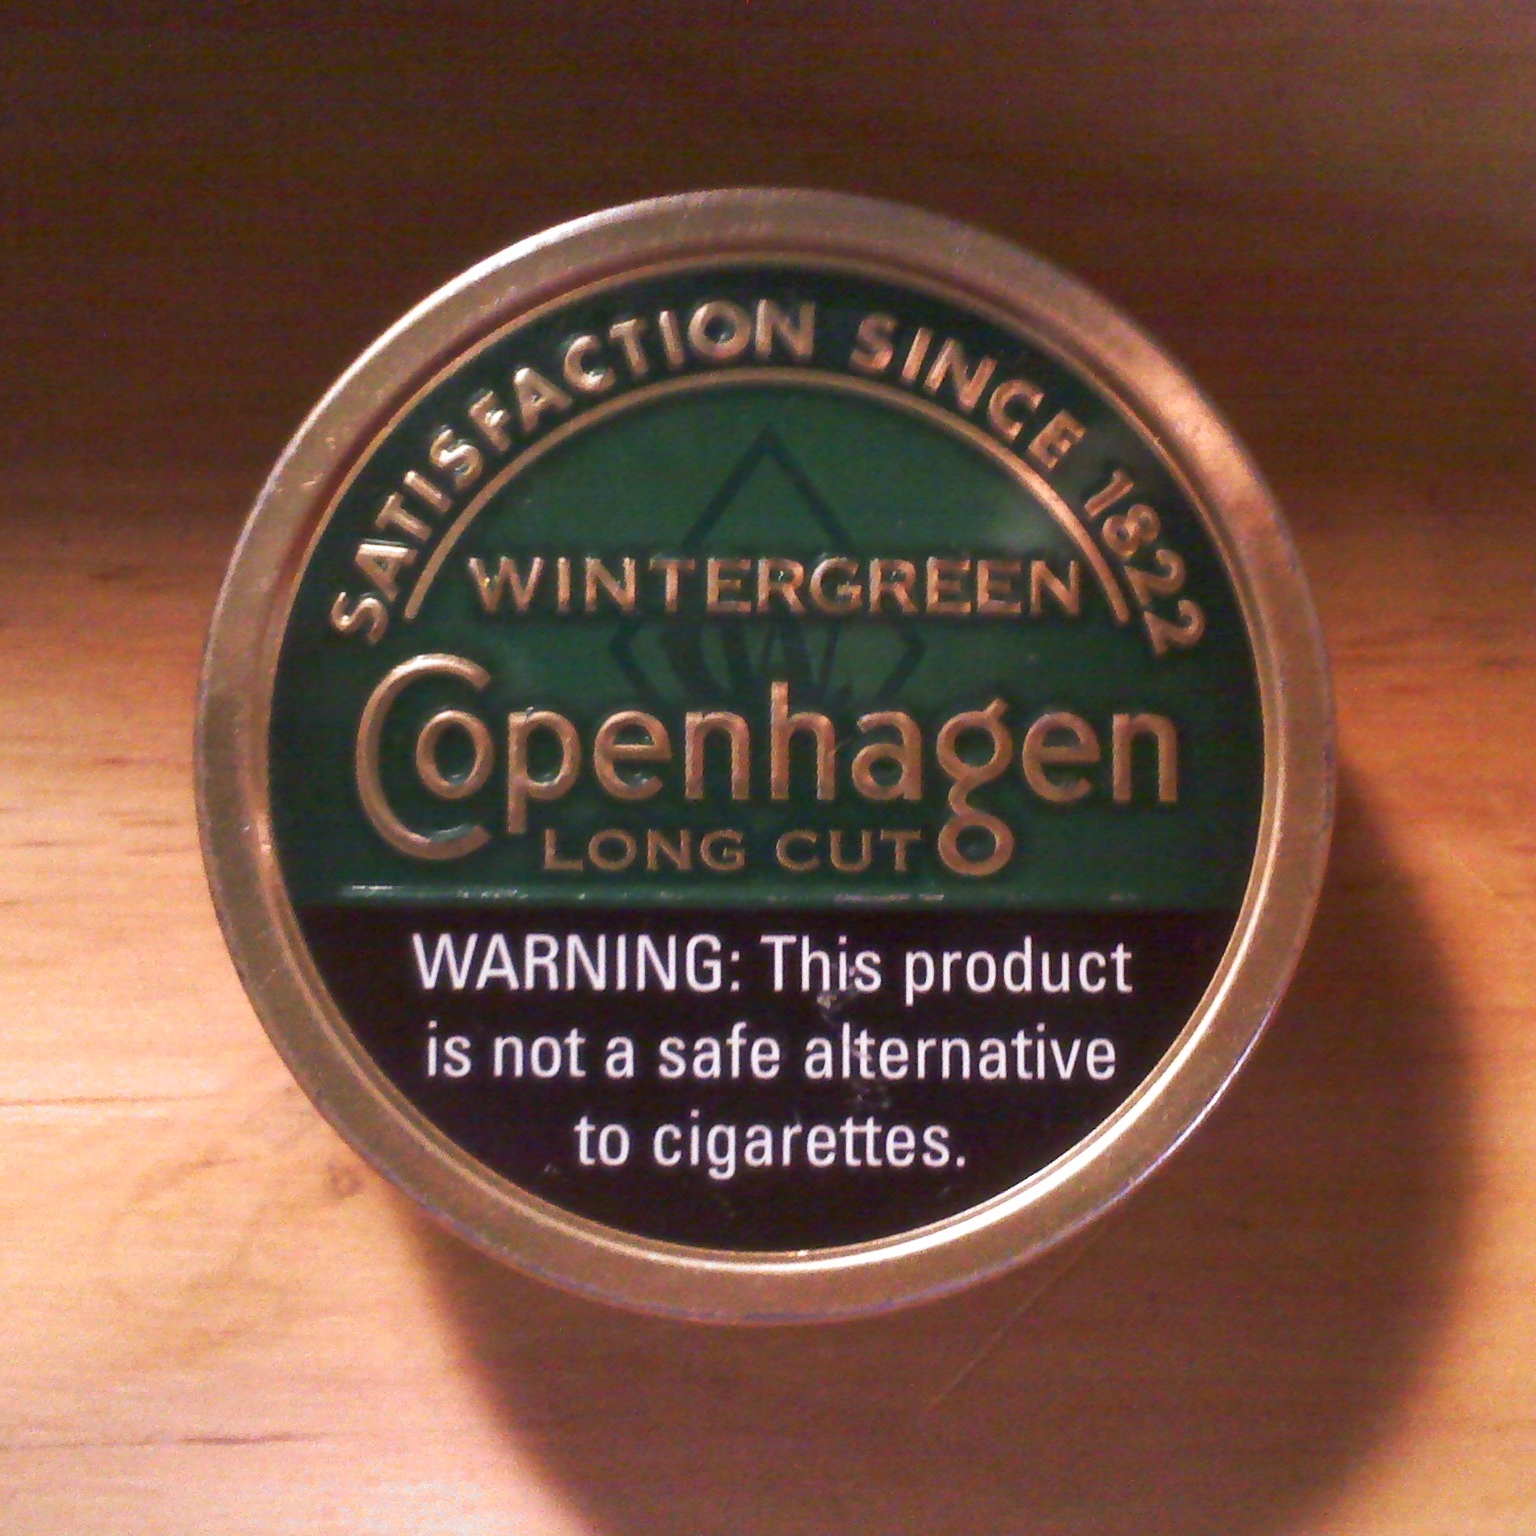 Copenhagen tobacco